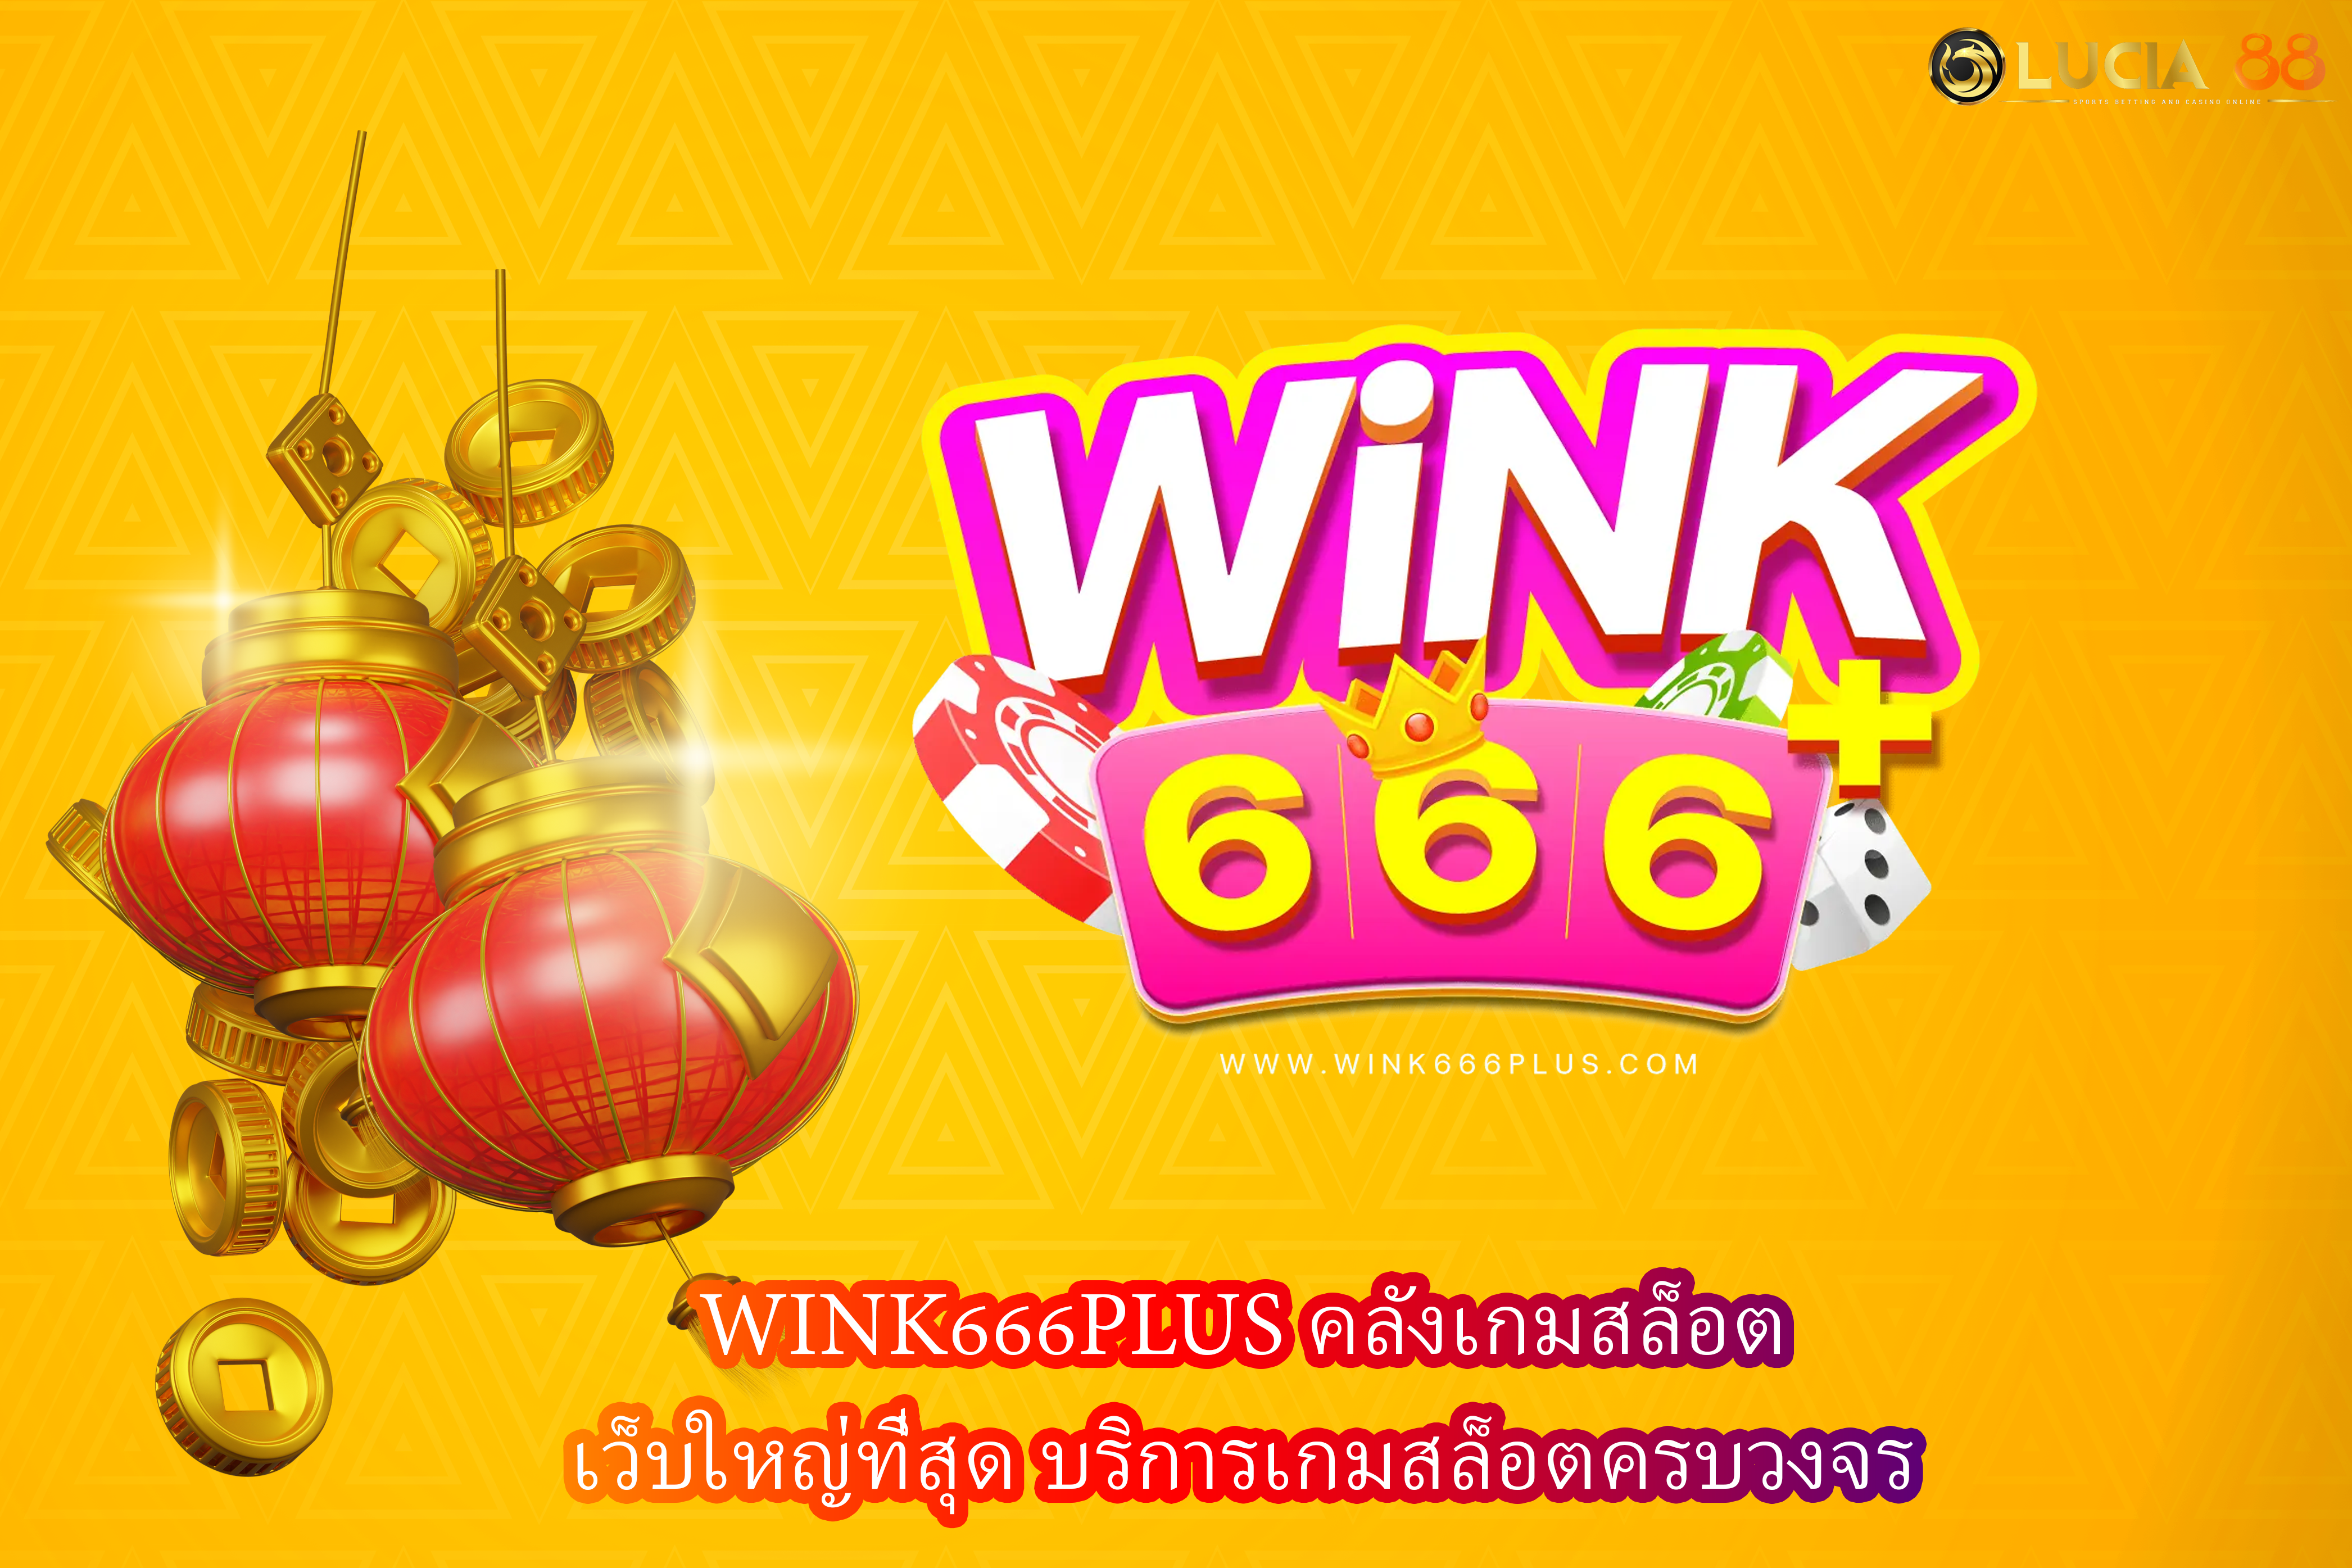 WINK666PLUS คลังเกมสล็อต เว็บใหญ่ที่สุด บริการเกมสล็อตครบวงจร